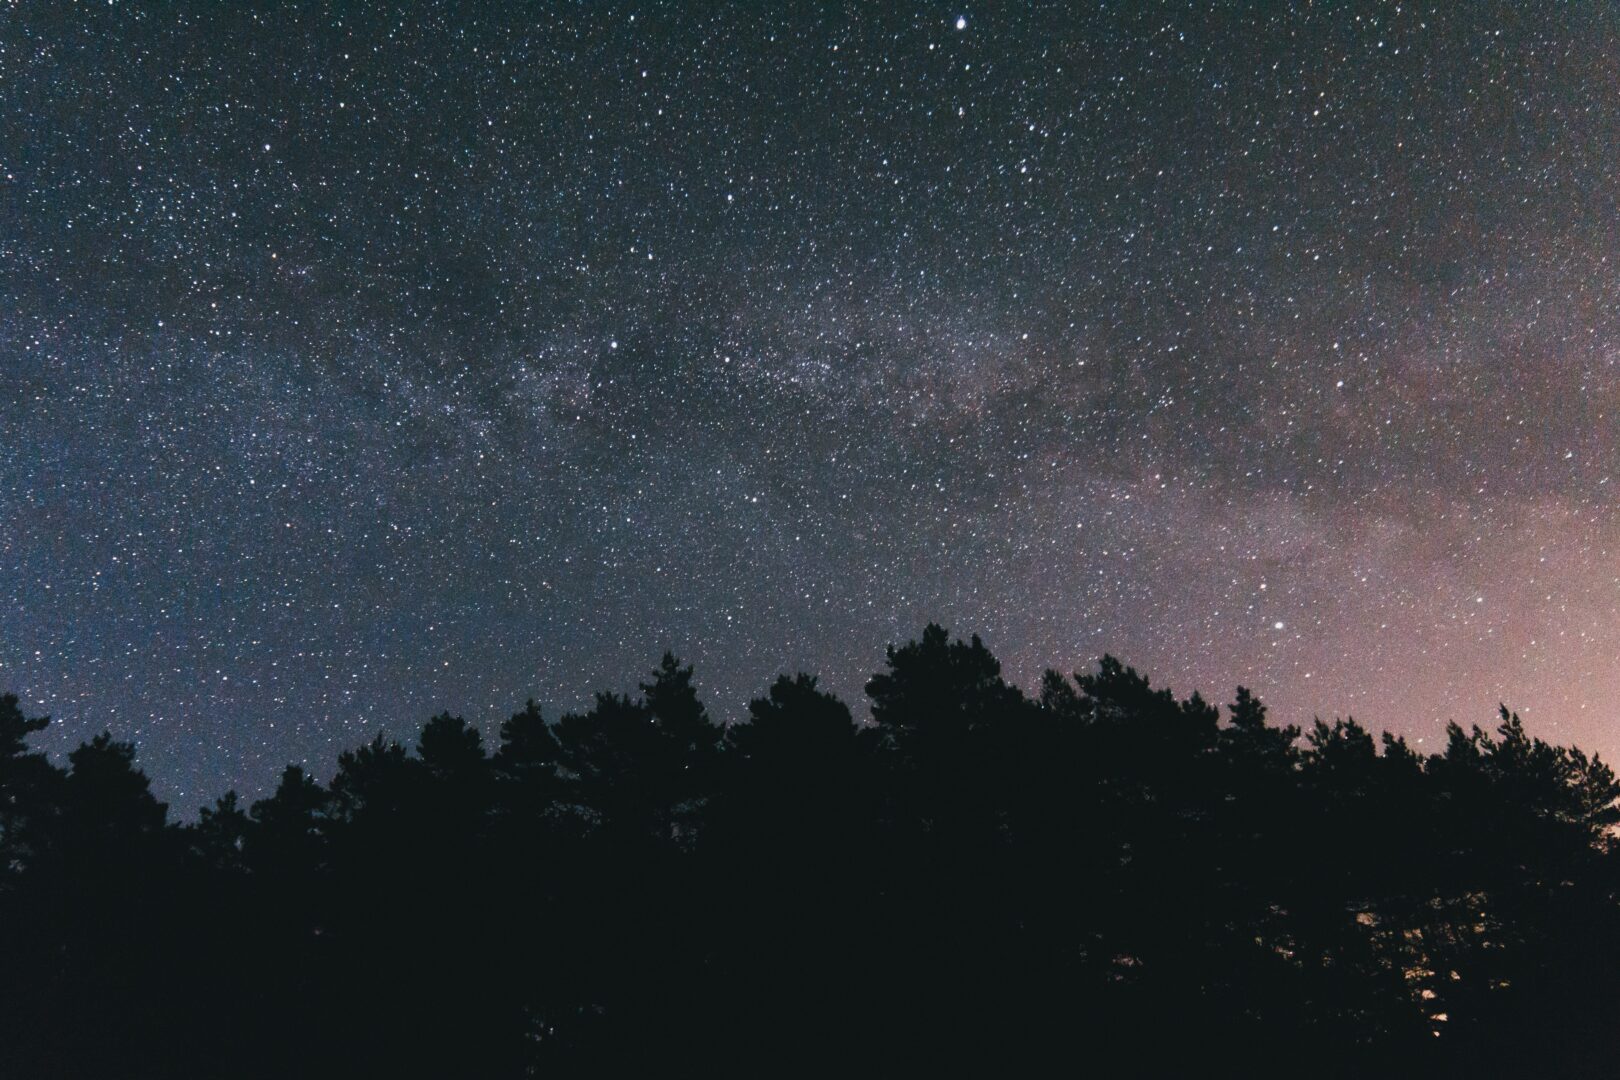 A clear night sky full of stars